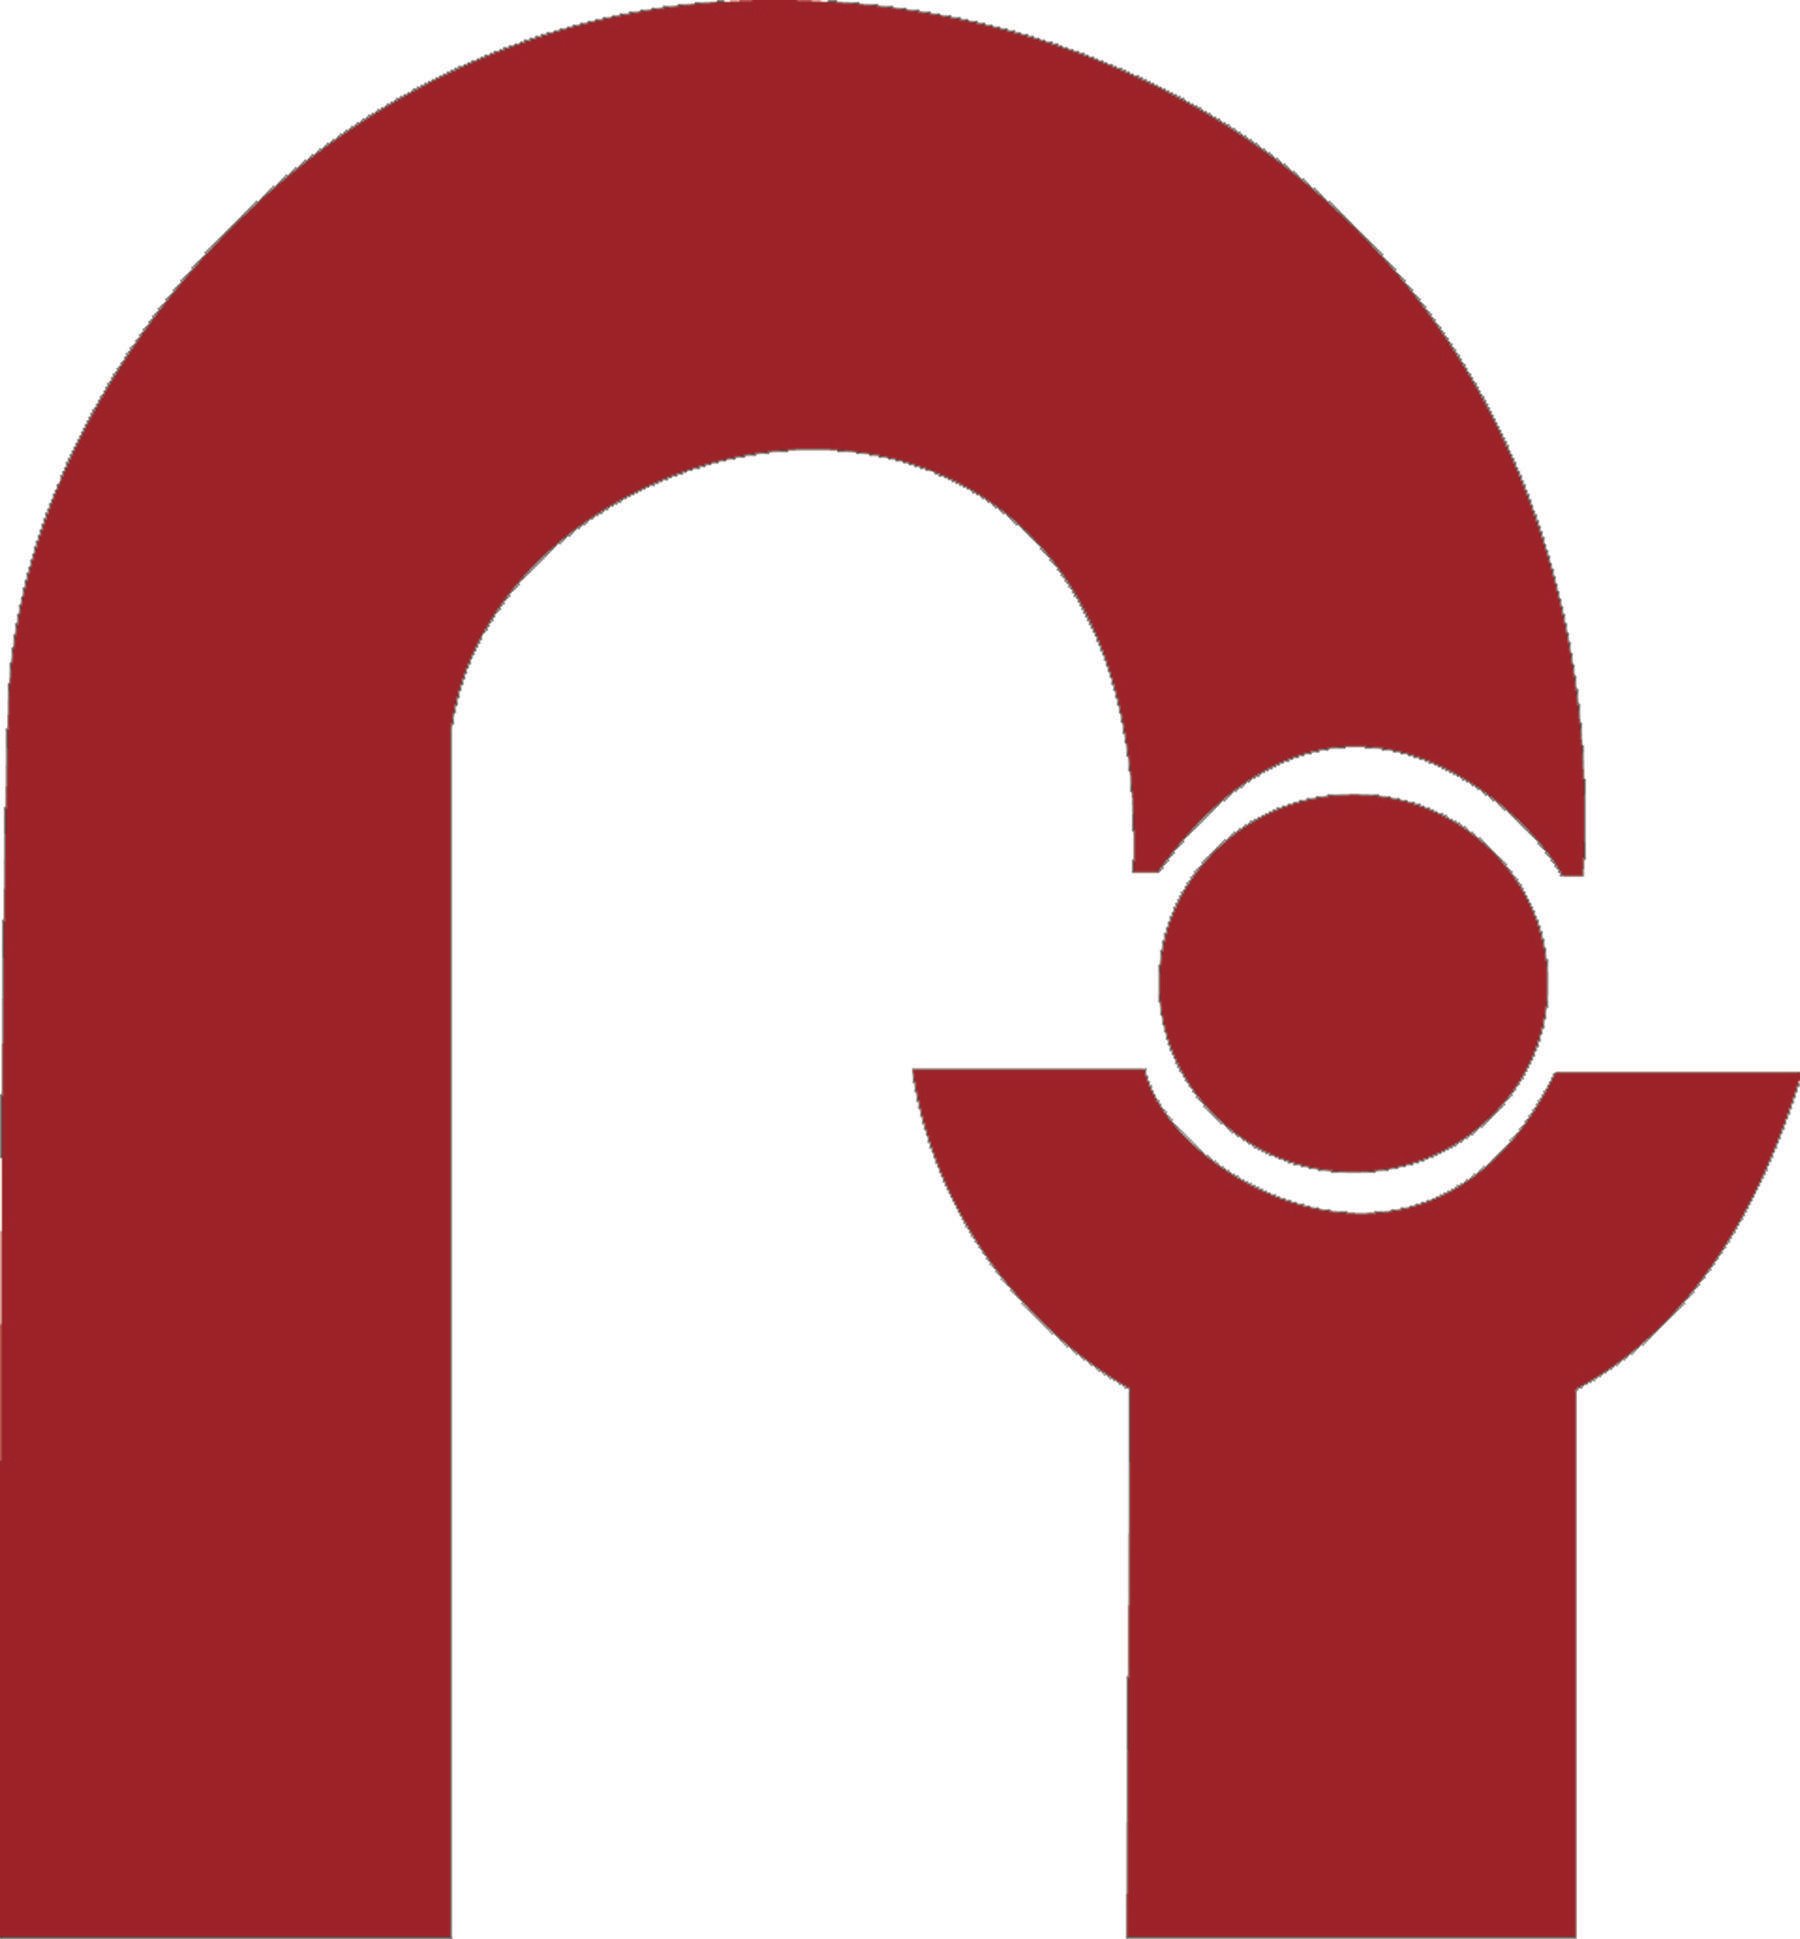 That Has a Red O Logo - RI Logos - The Robotics Institute Carnegie Mellon University